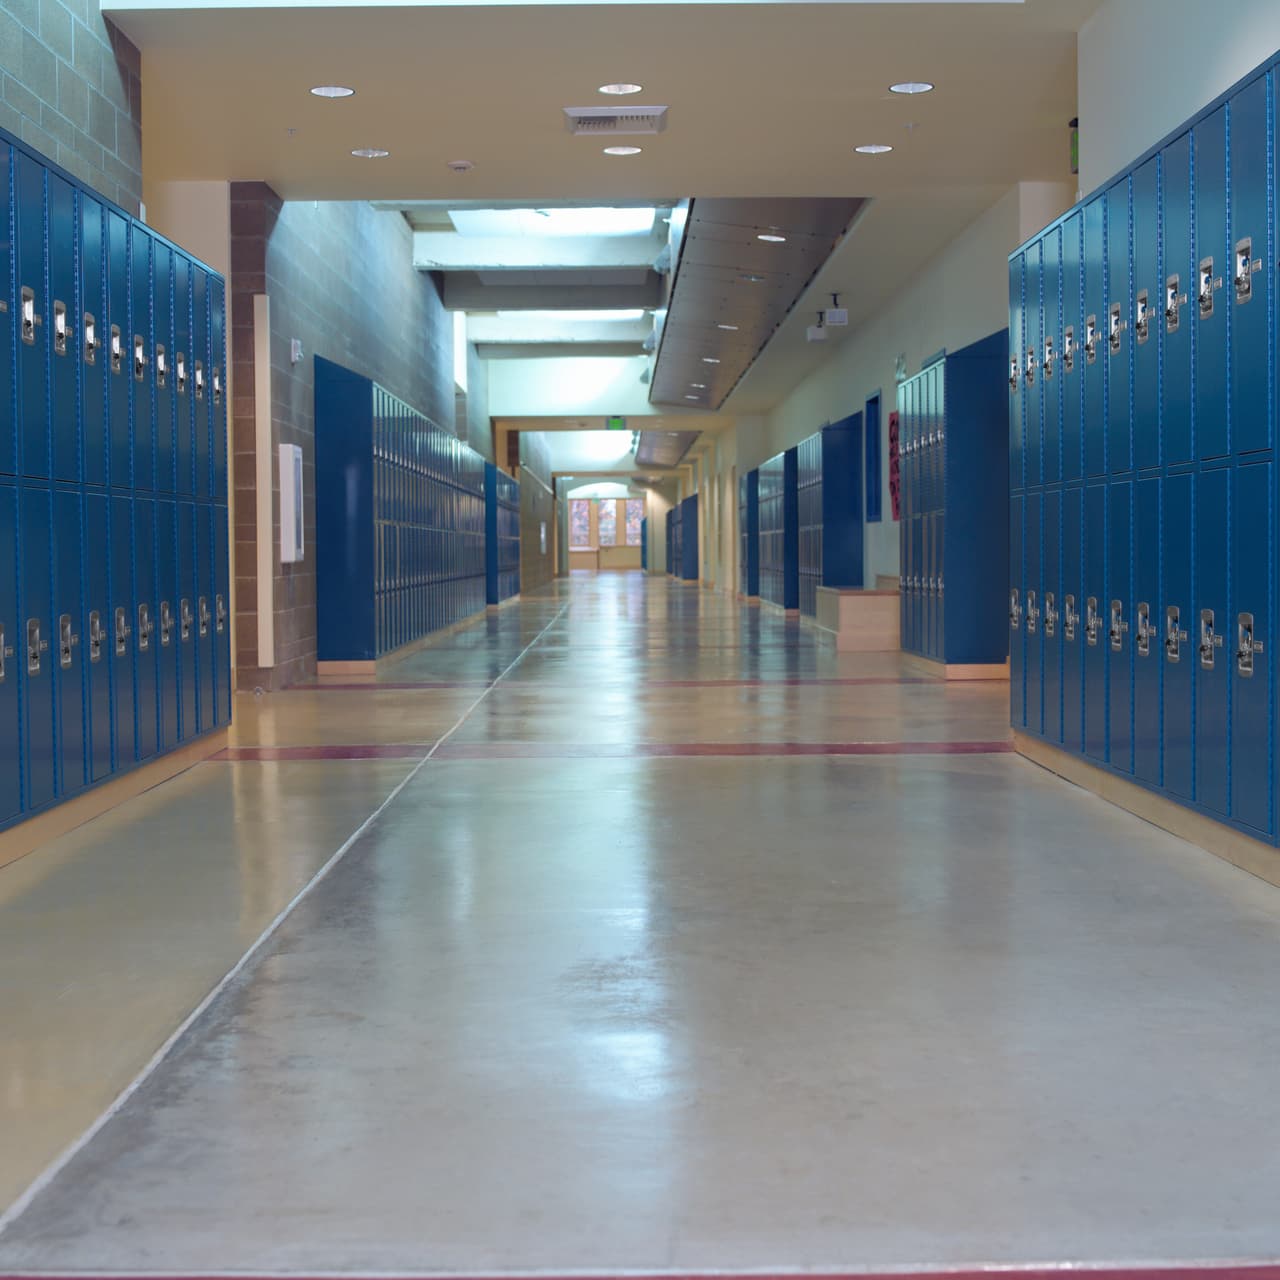 A school hallway. Credit: Getty Images